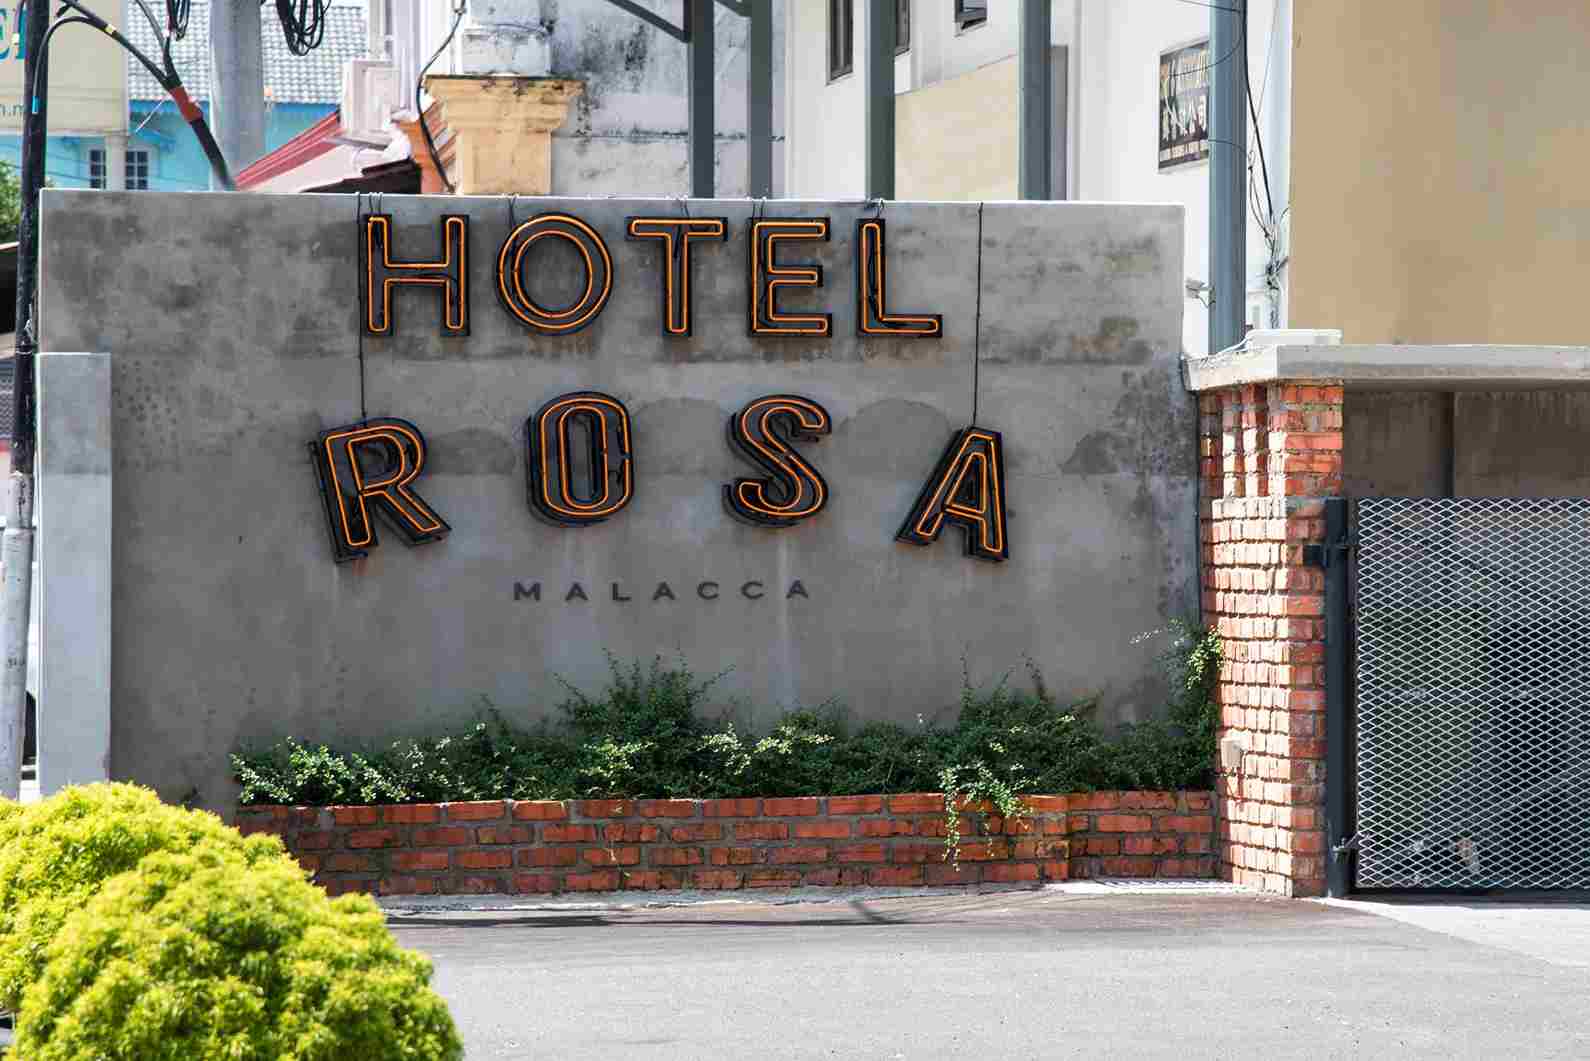 Rosa Malacca Hotel entrance